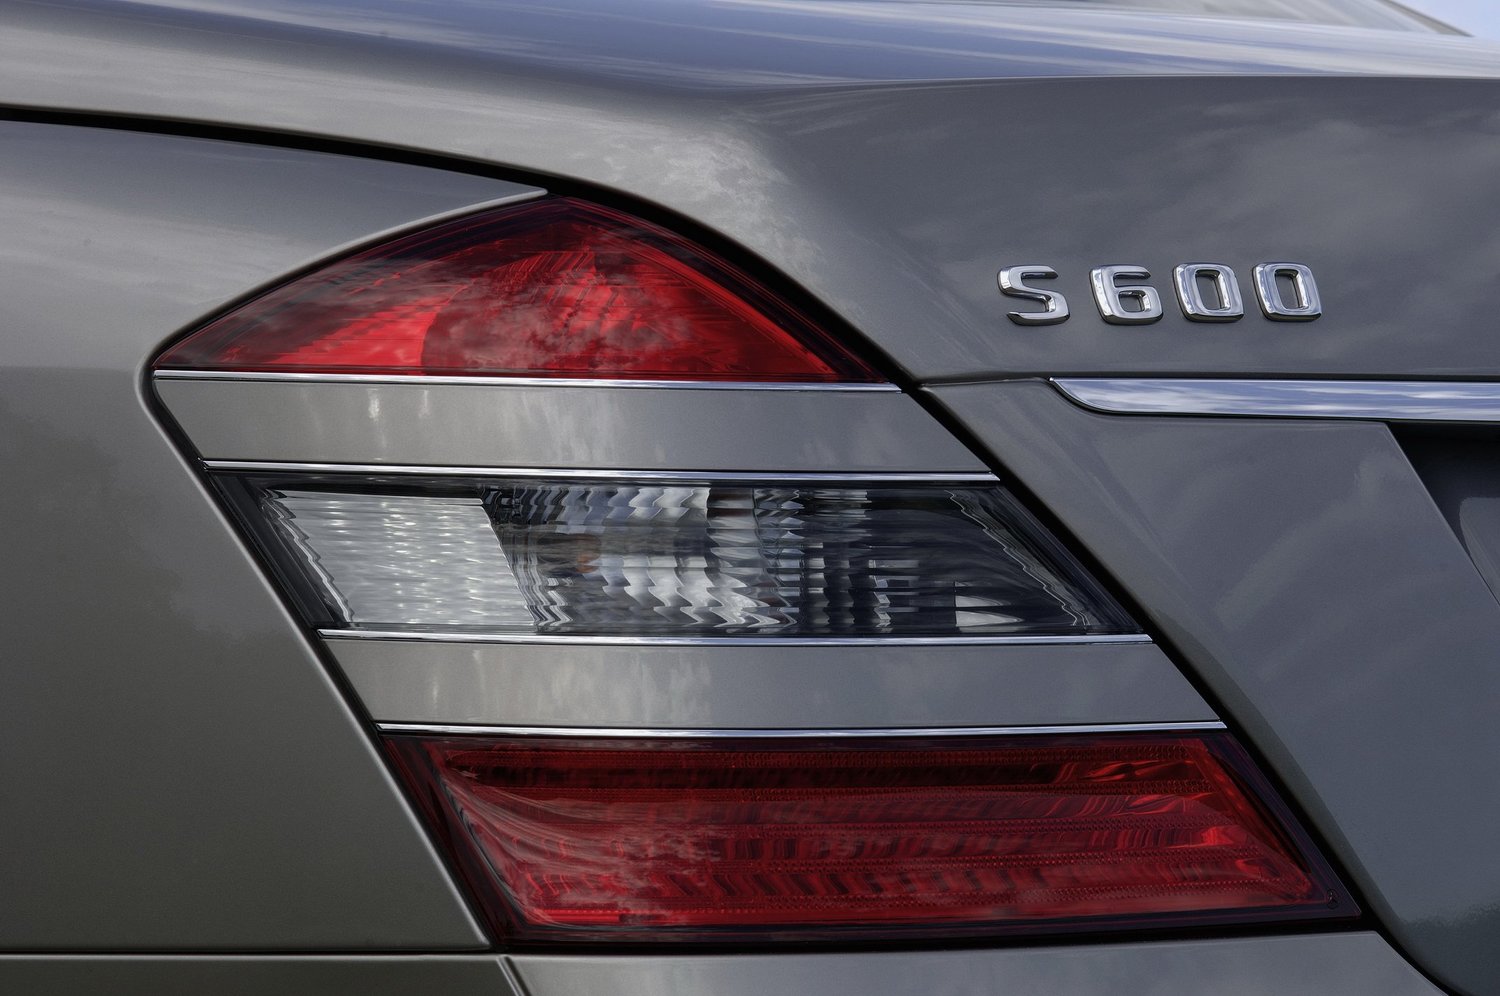 седан Long Mercedes-Benz S-klasse 2005 - 2009г выпуска модификация 3.0 AT (235 л.с.) 4×4